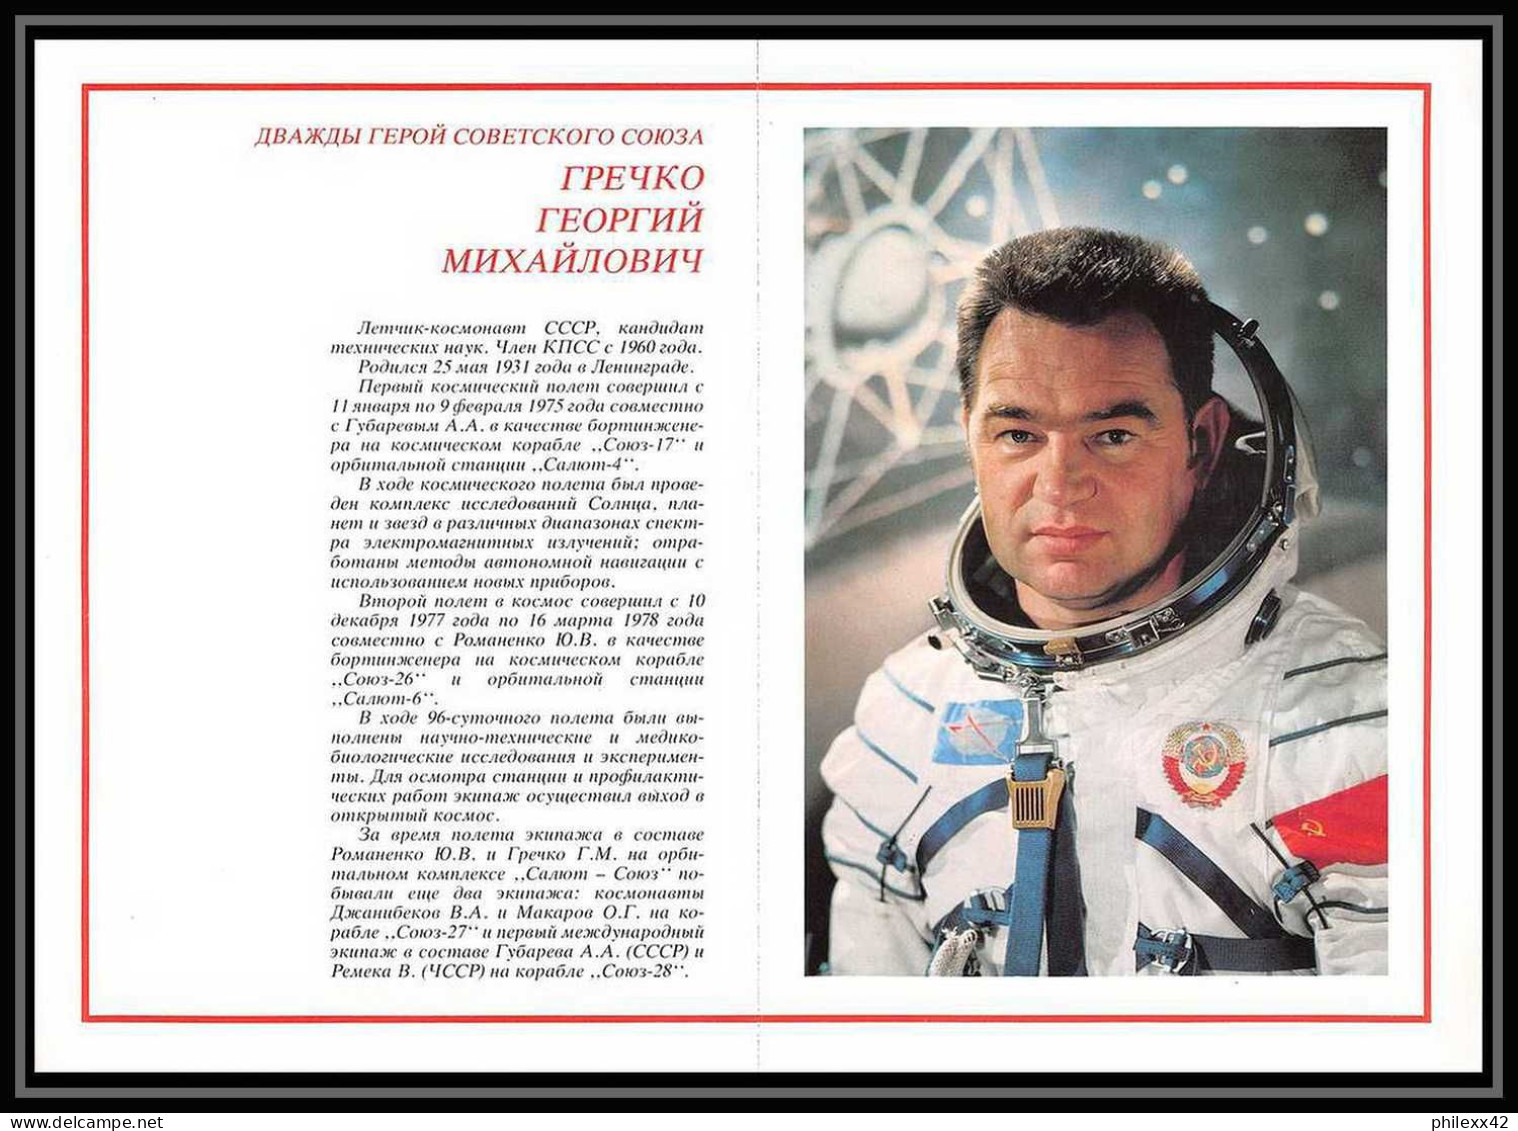 11859/ Espace (space Raumfahrt) Photo D'Astronaute Cosmonaut 20x28 Cm Russie (Russia Urss USSR)  - United States